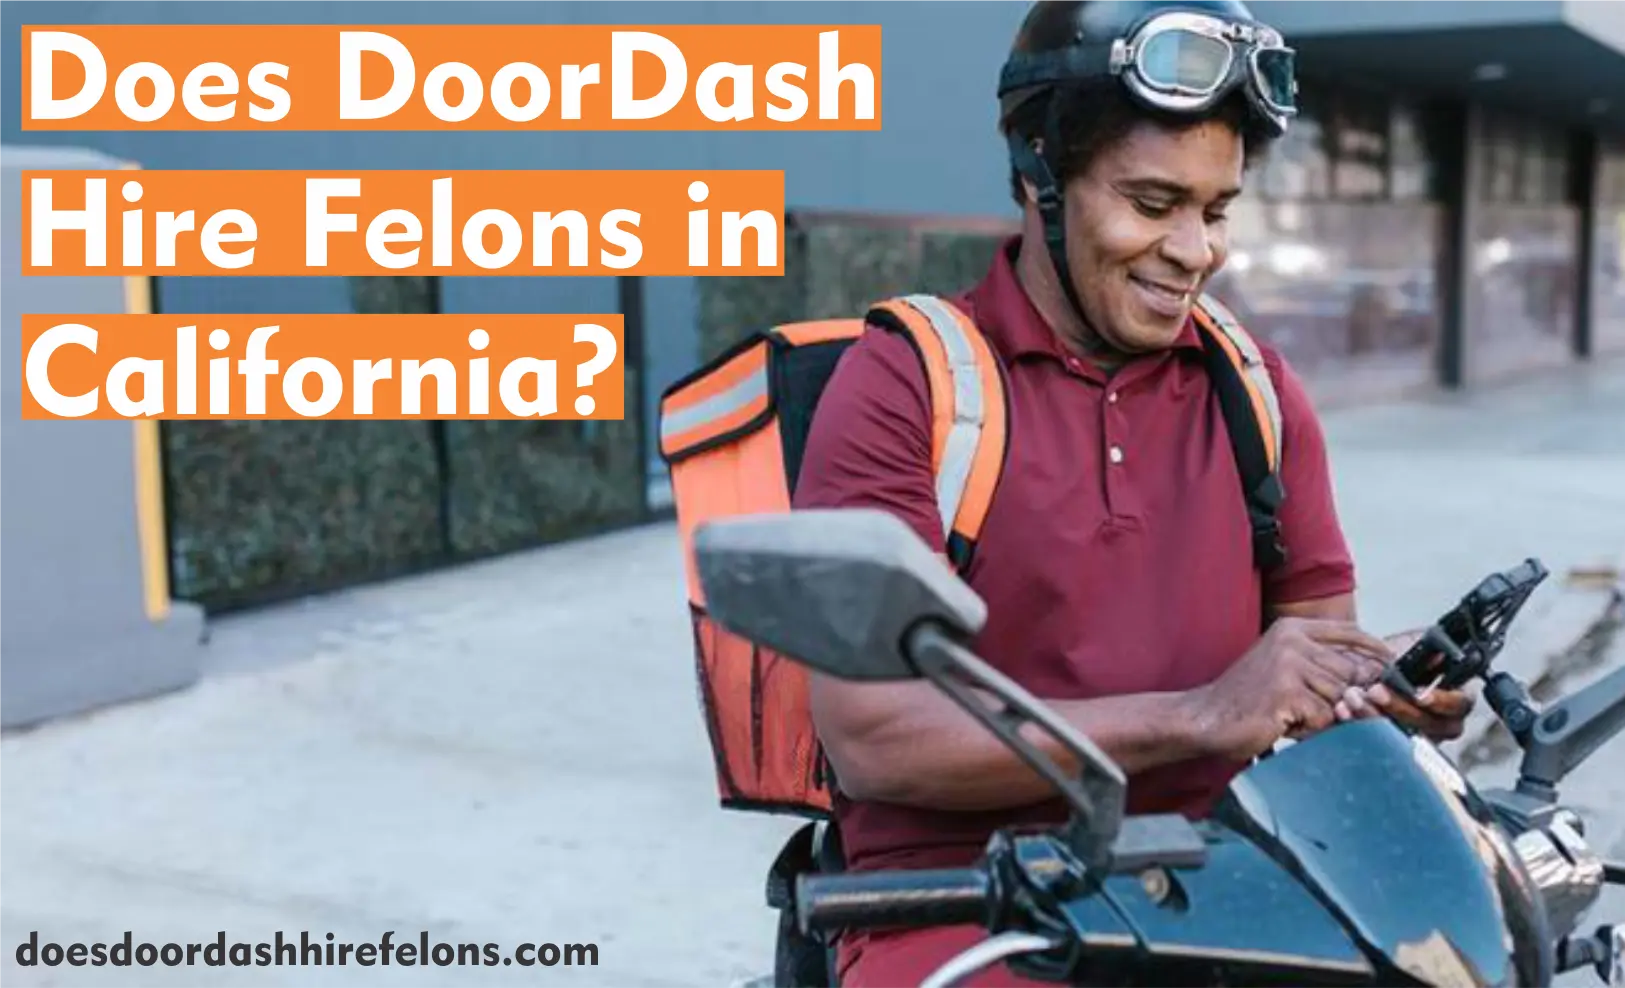 Does DoorDash Hire Felons in California?